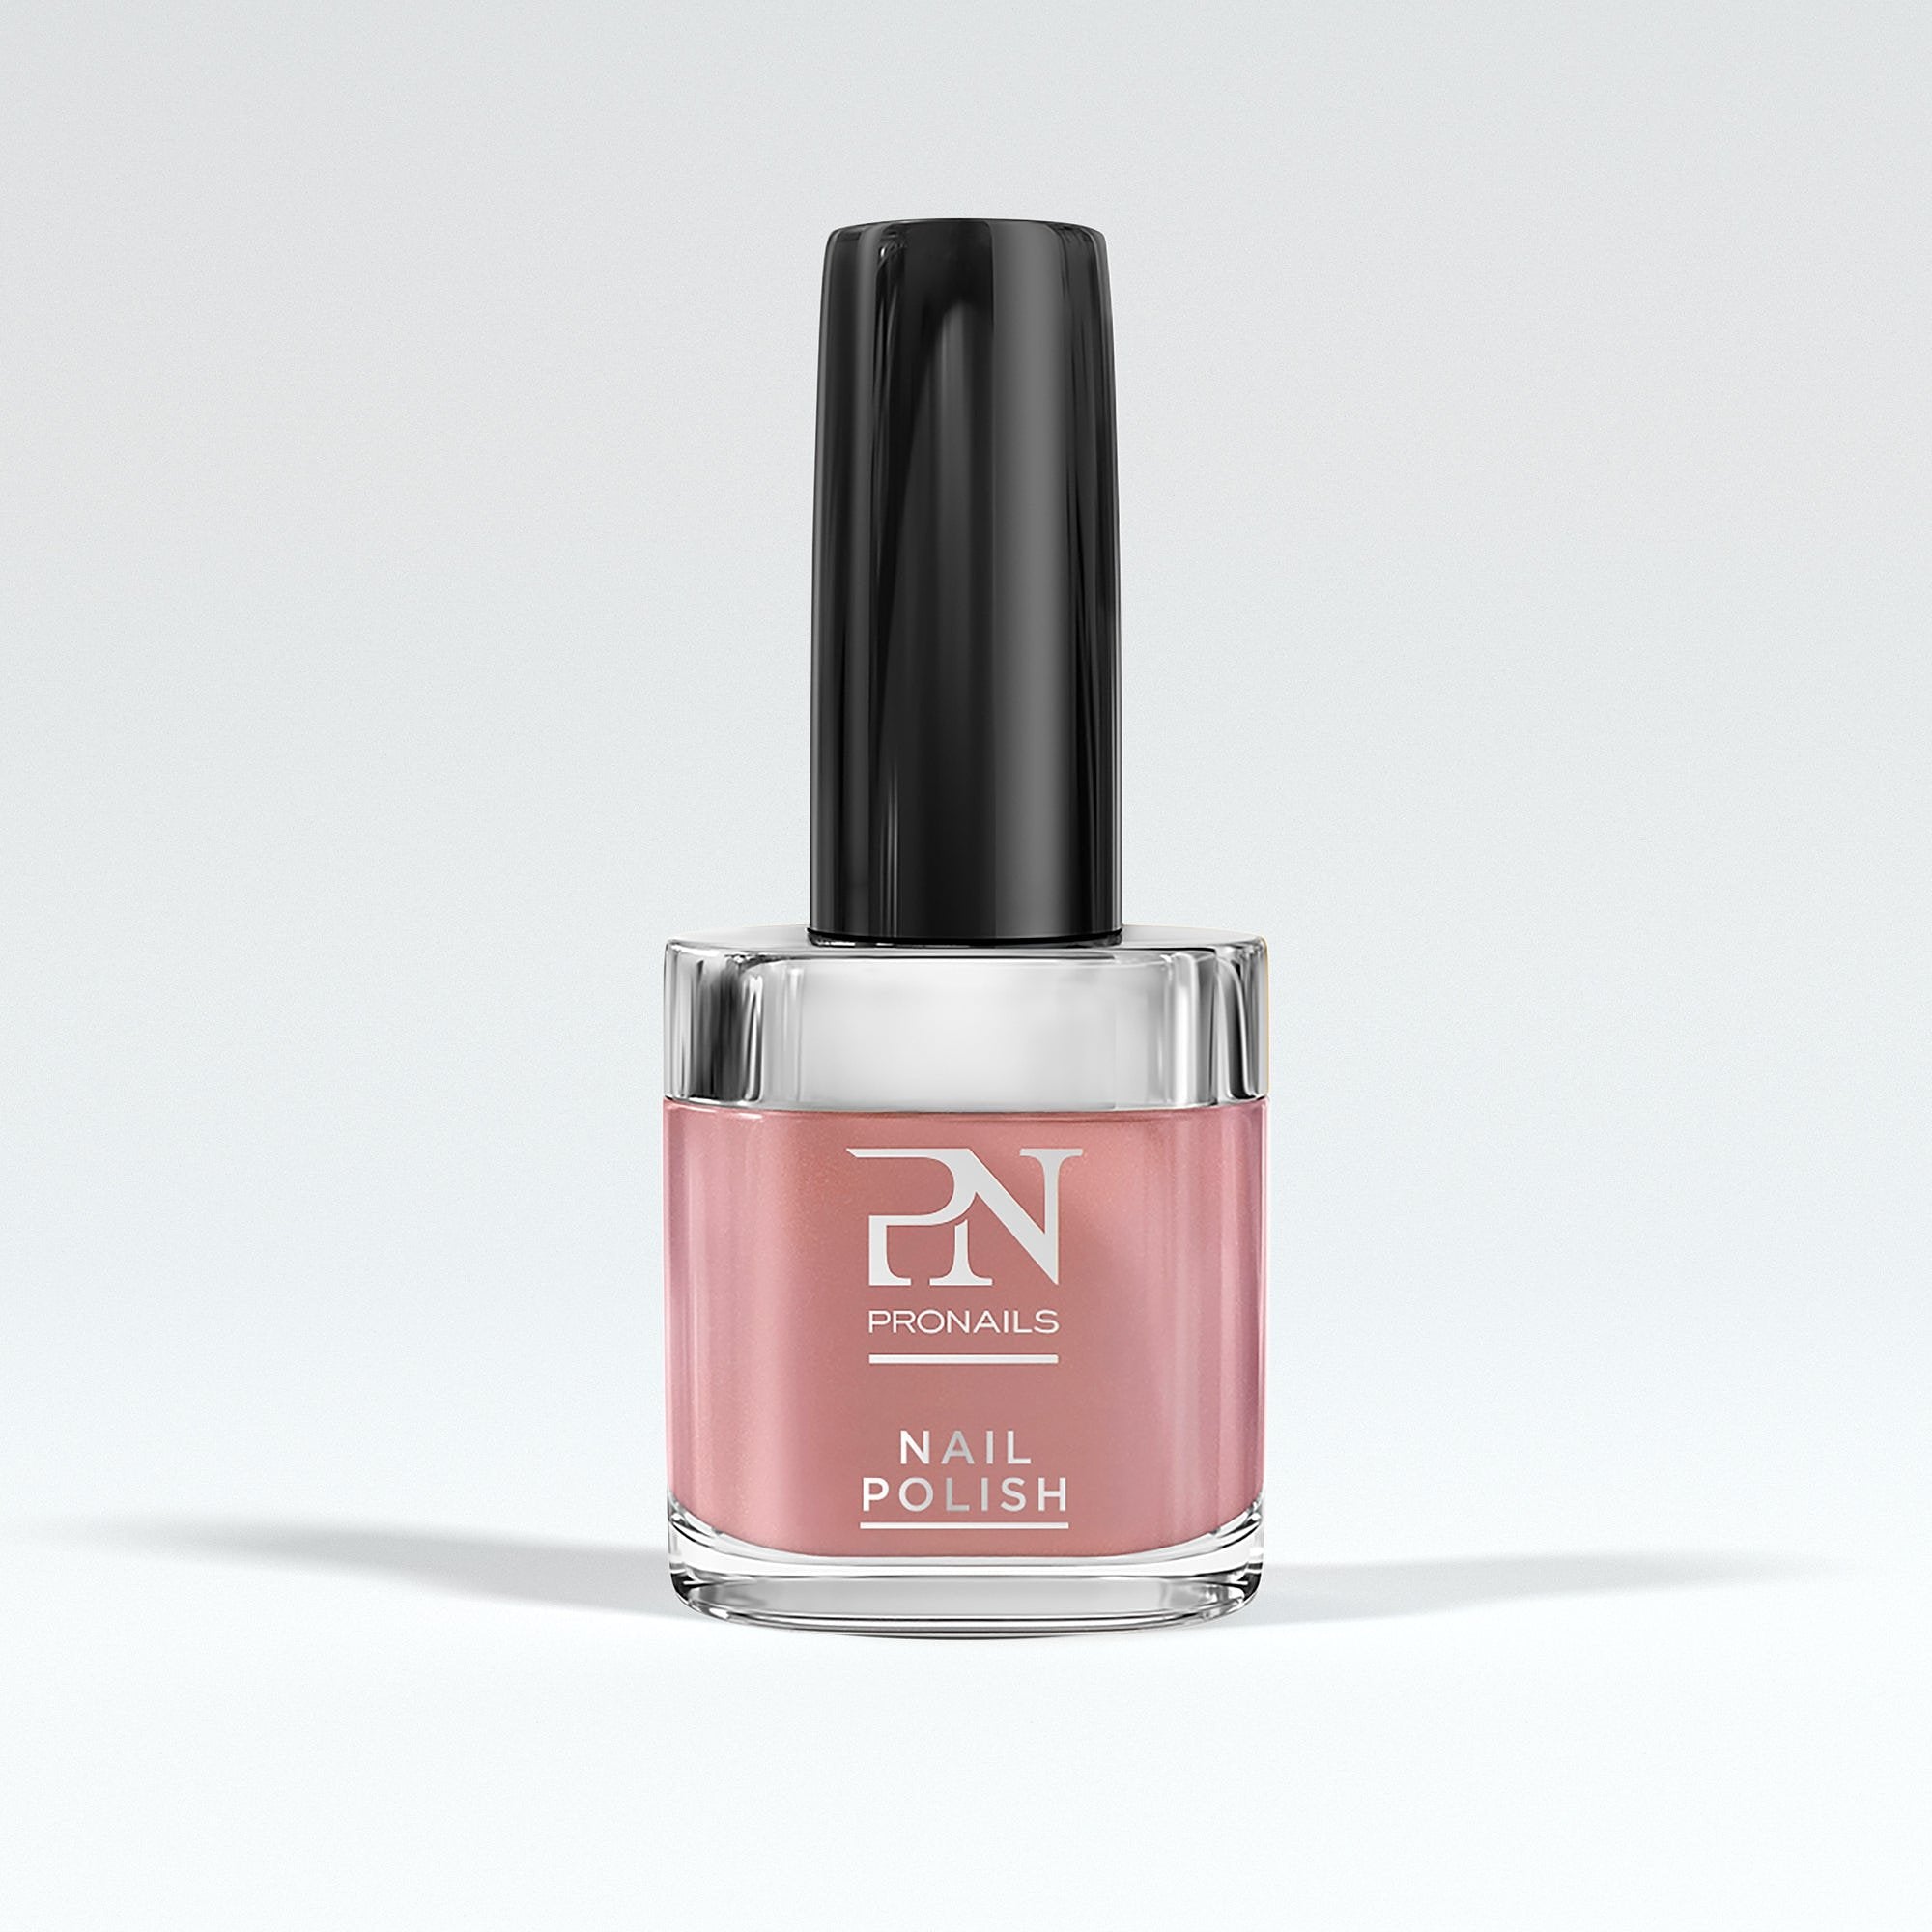 PN SELFCARE - Pink nail polish 10ml - Vegan Cruelty Free